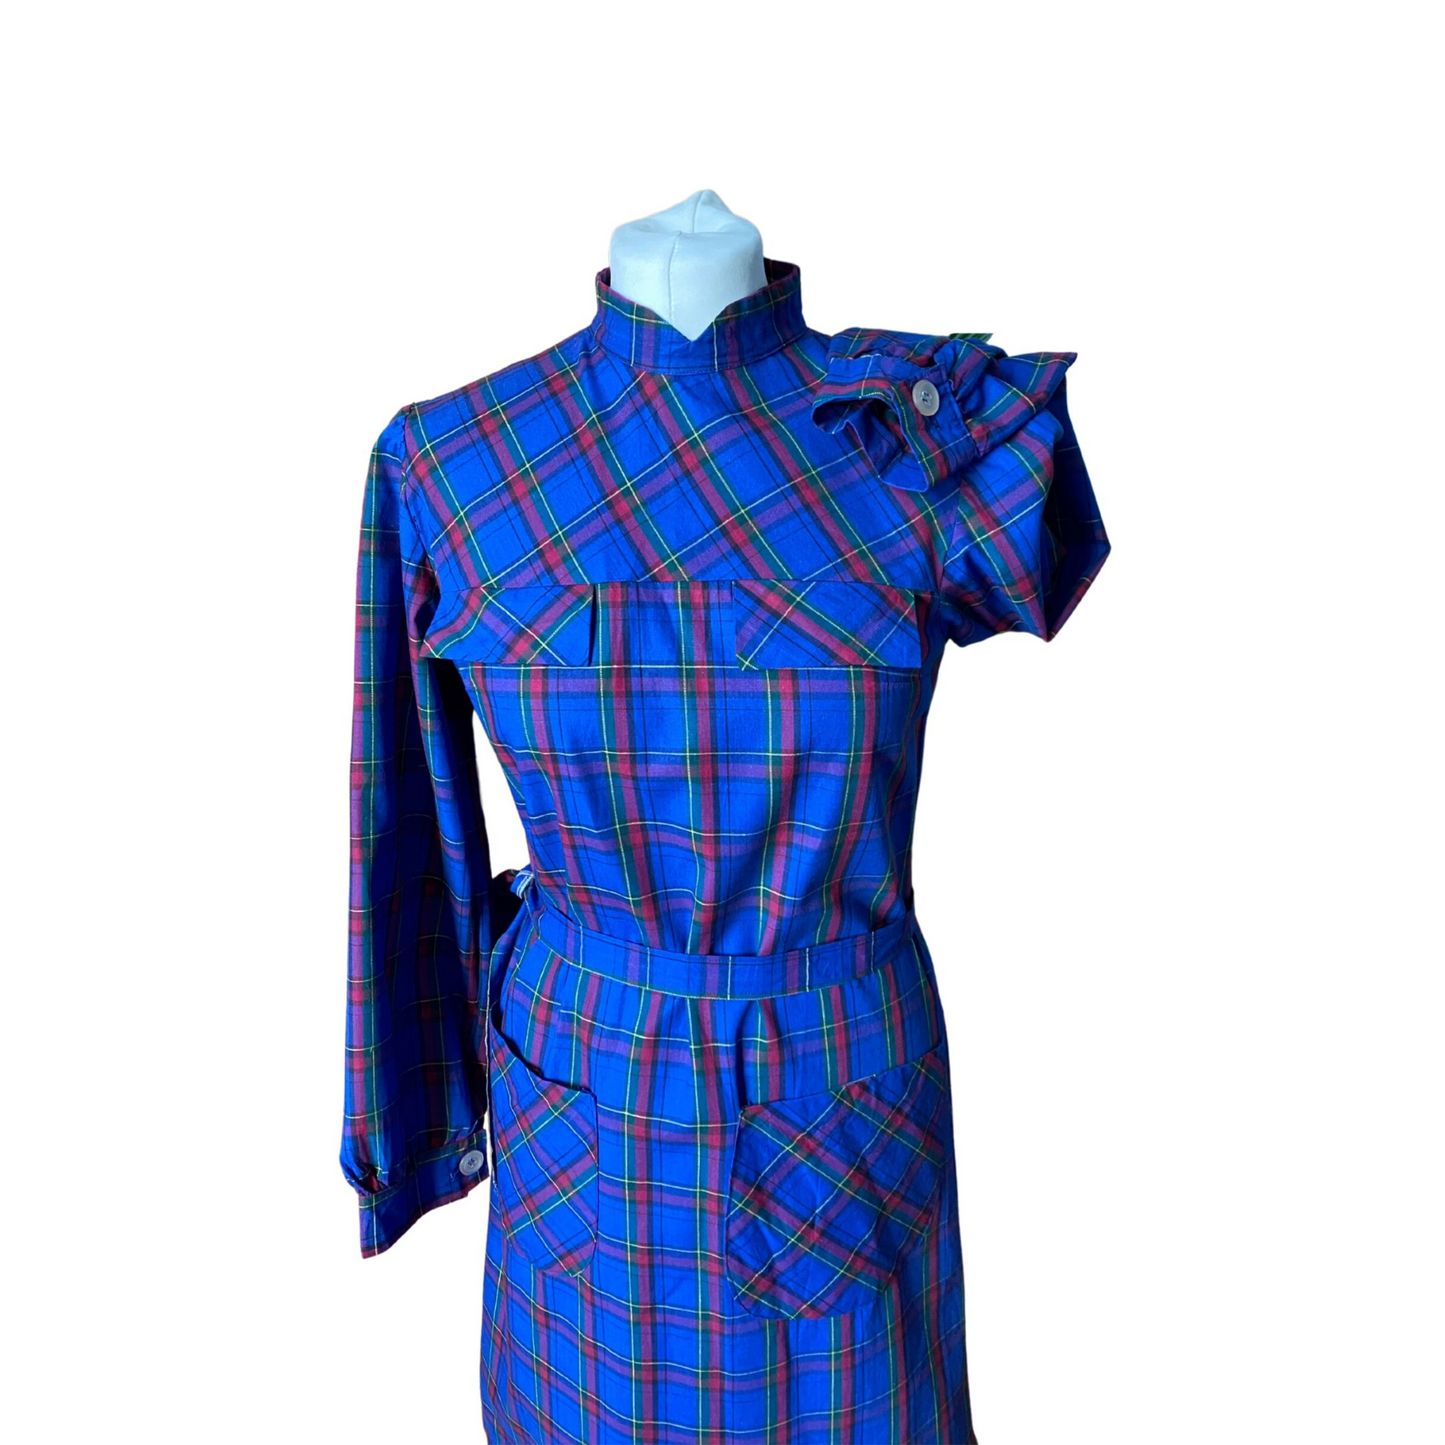 60s blue tartan long sleeved mini dress with button up back. Approx U.K. size 8-10